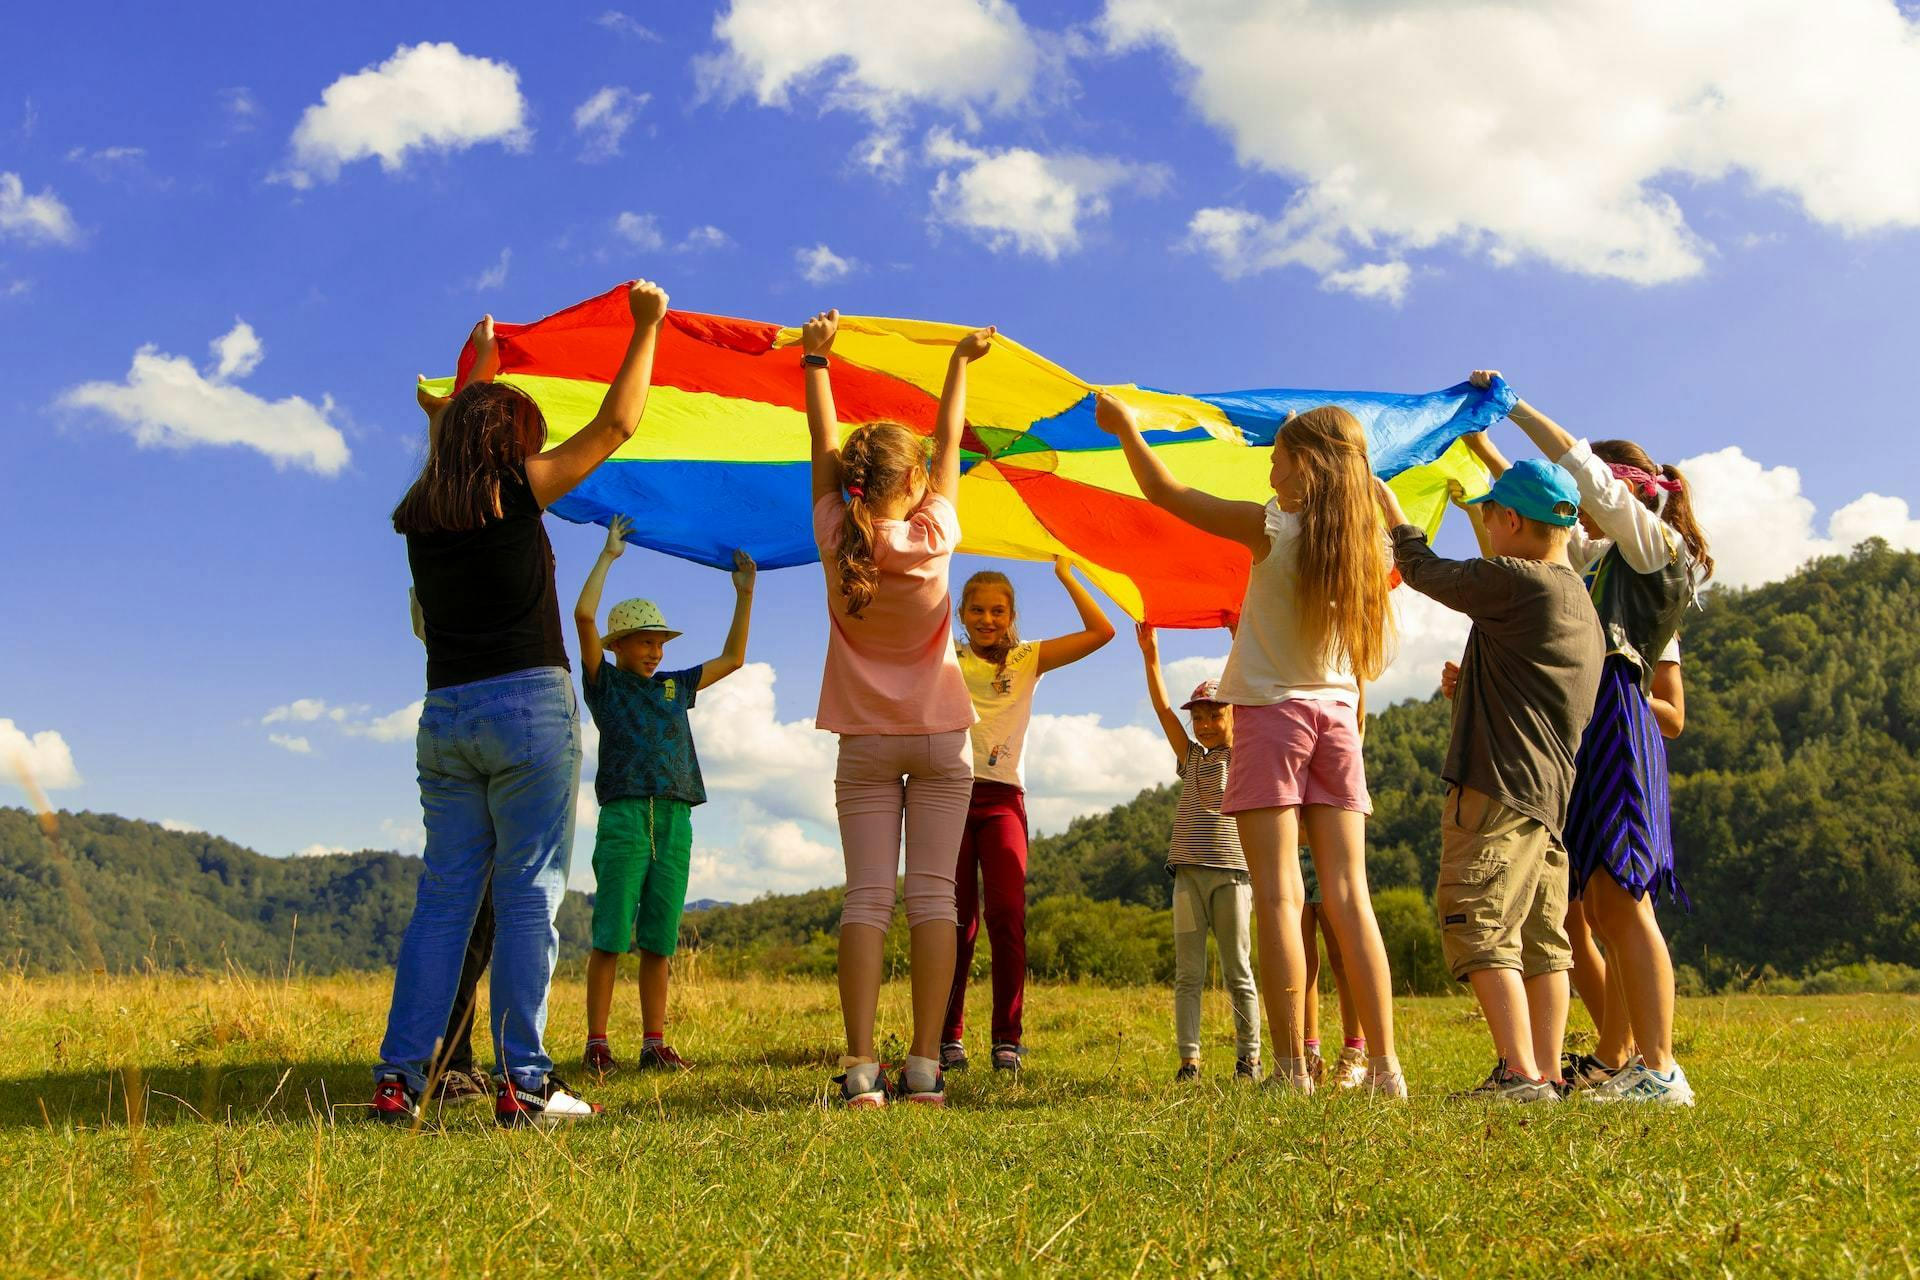 Children colored parachute in park